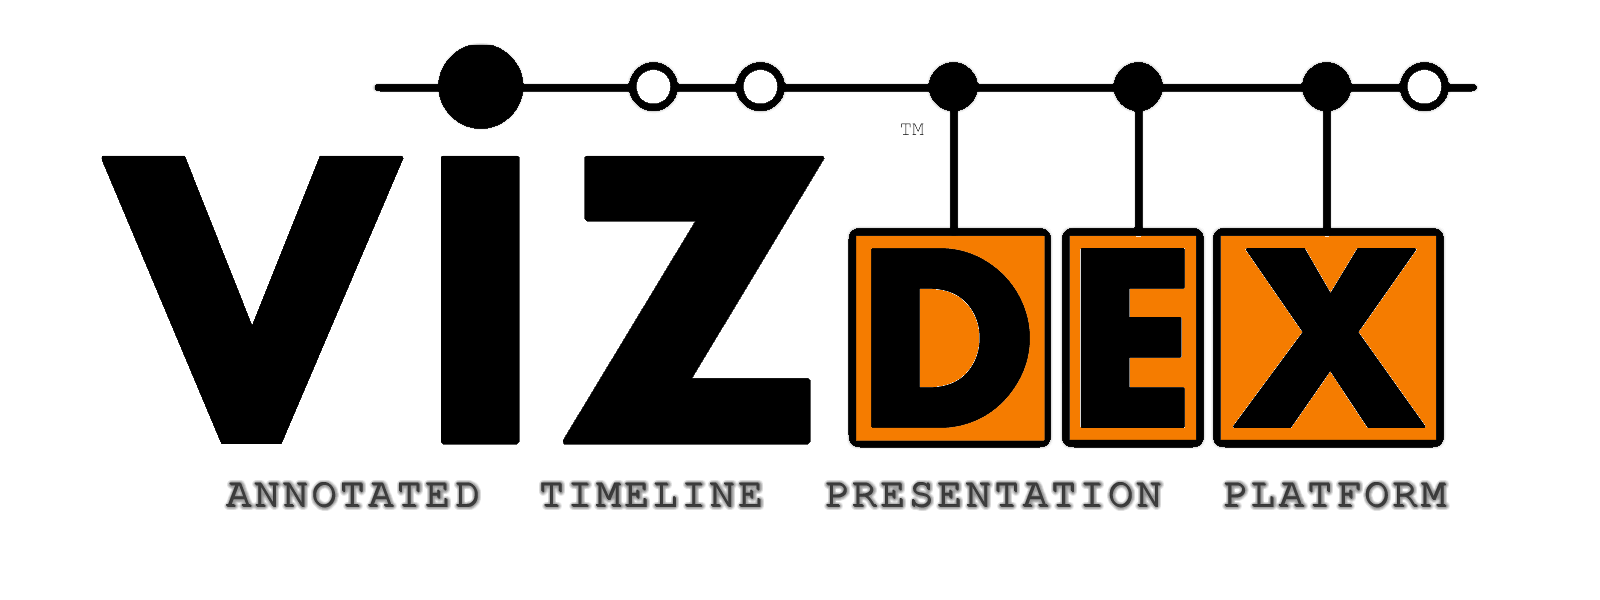 VIZdex Annotated Timeline Presentation Platform